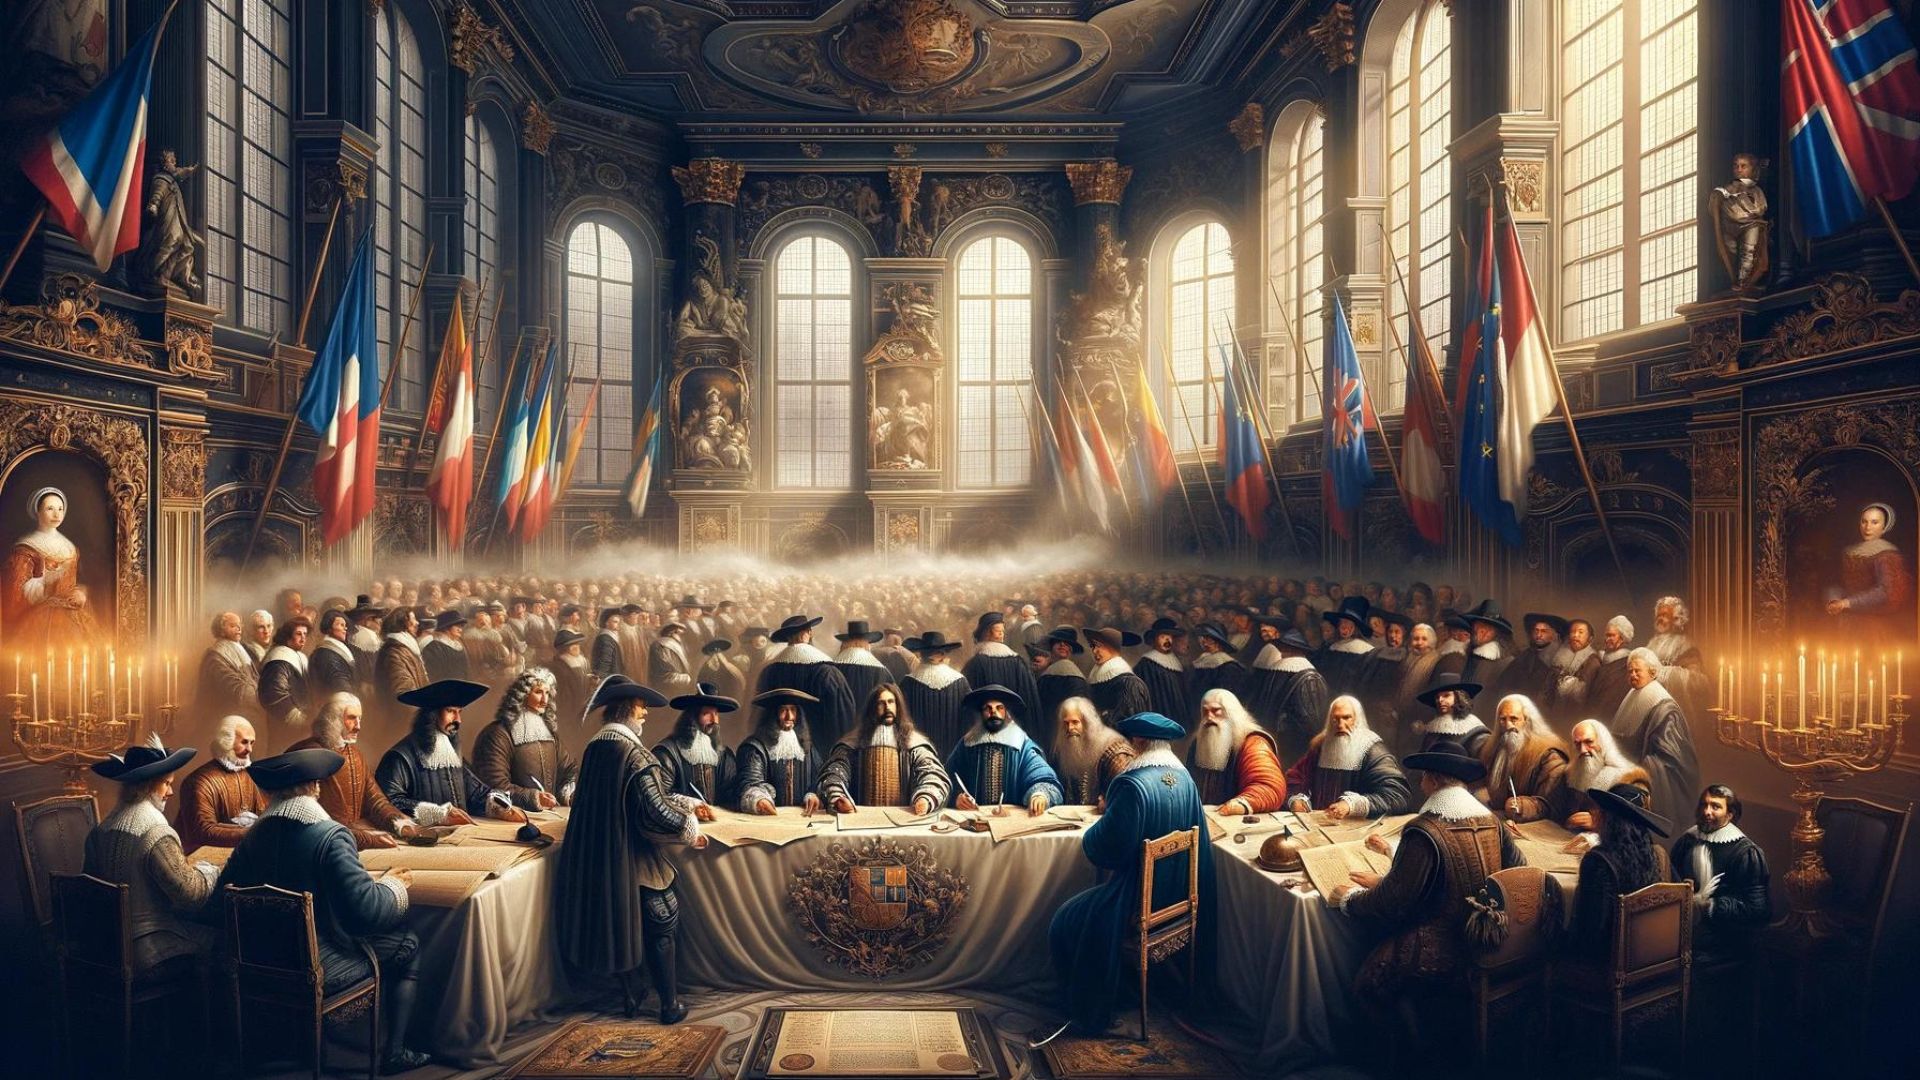 The Treaty of Westphalia